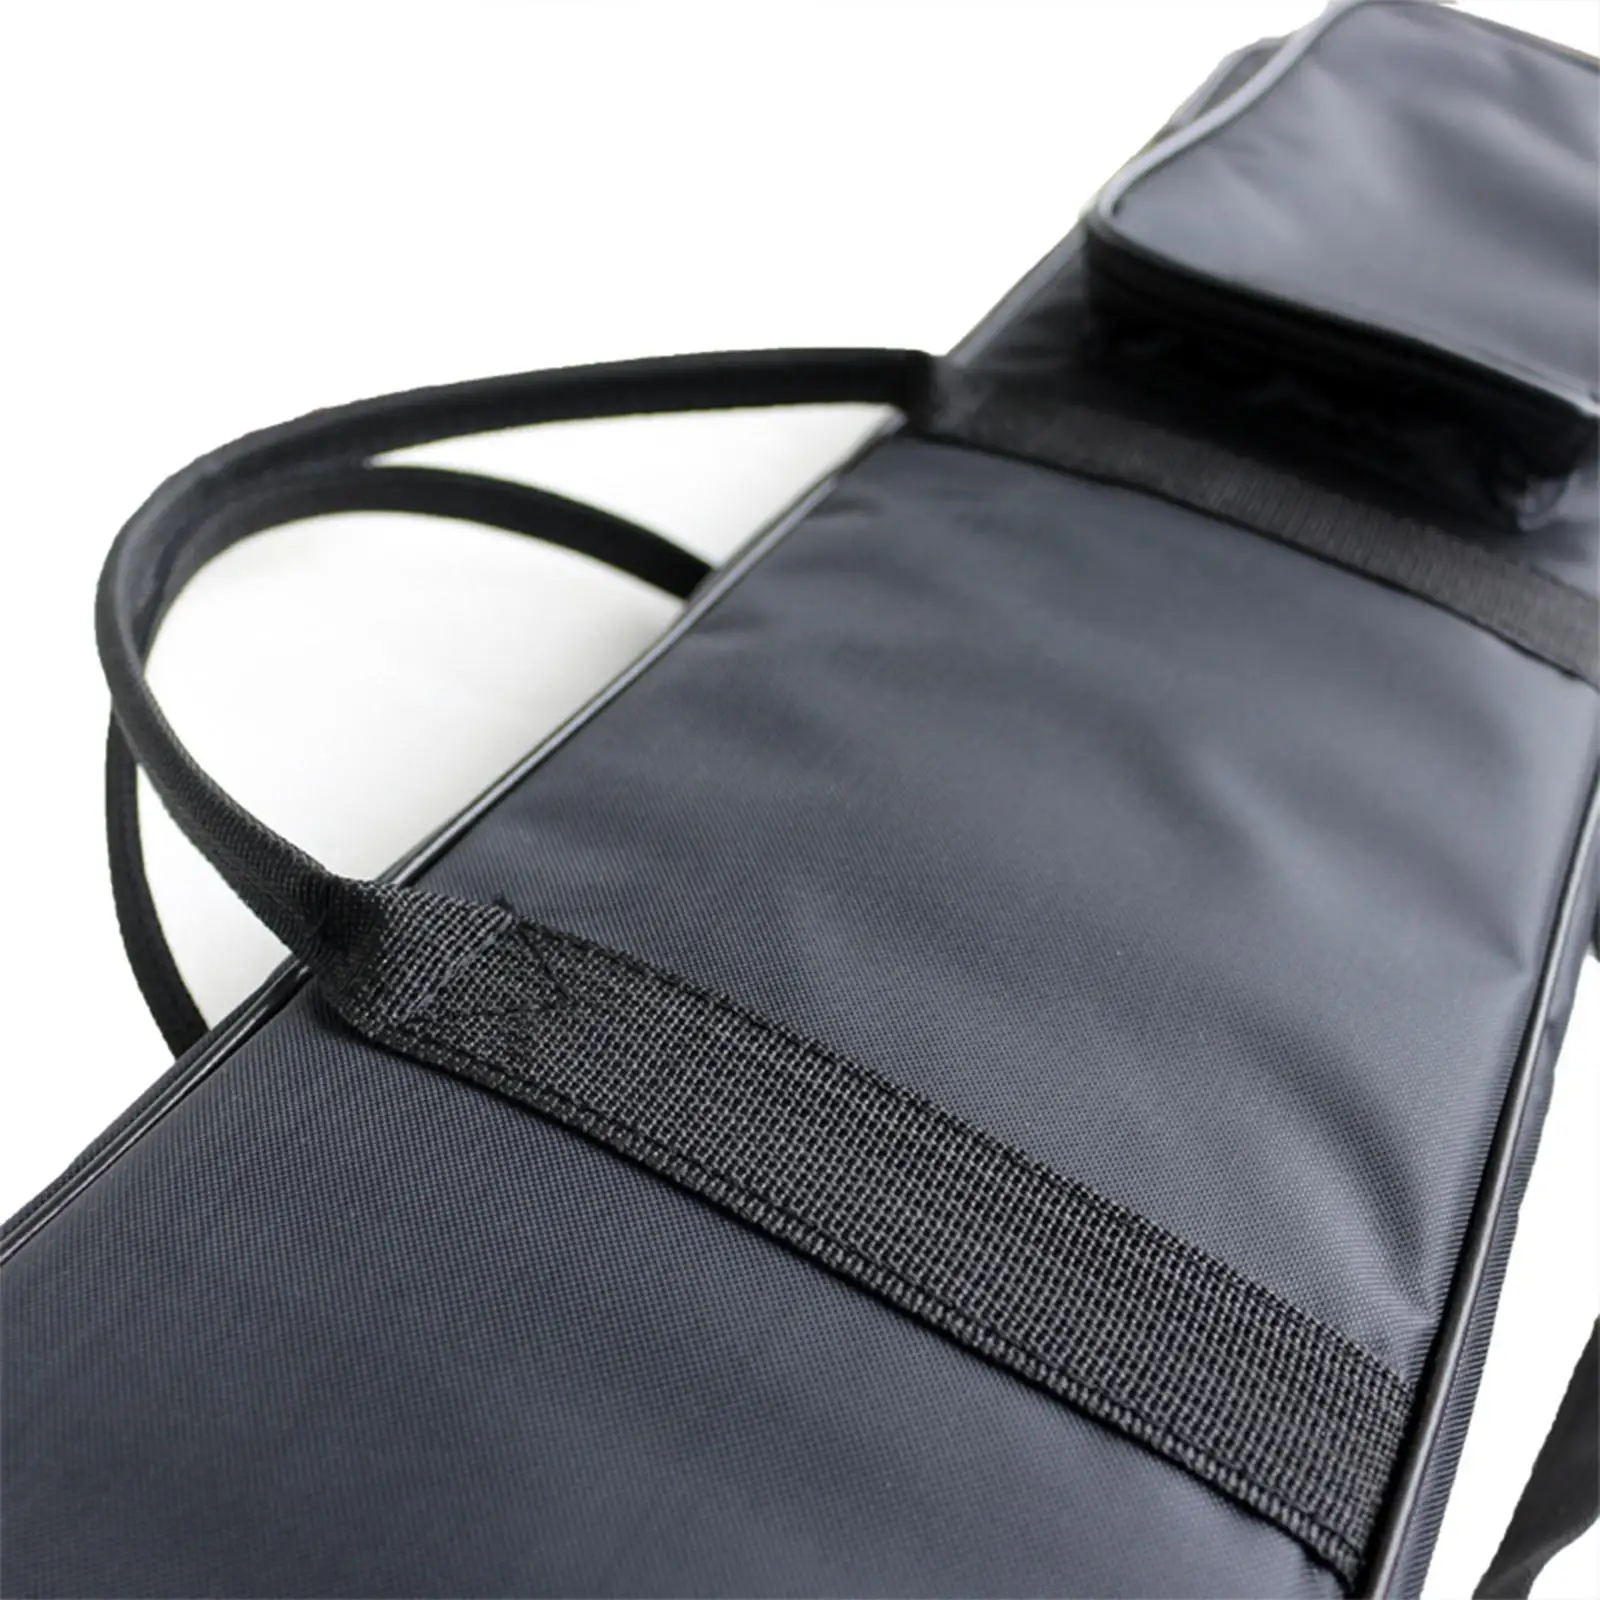 Flute Handbag with Adjustable Strap Thickened Padded Gig Bag Lightweight Flute Accessories Soft Flute Gig Bag Carrying Case Bag